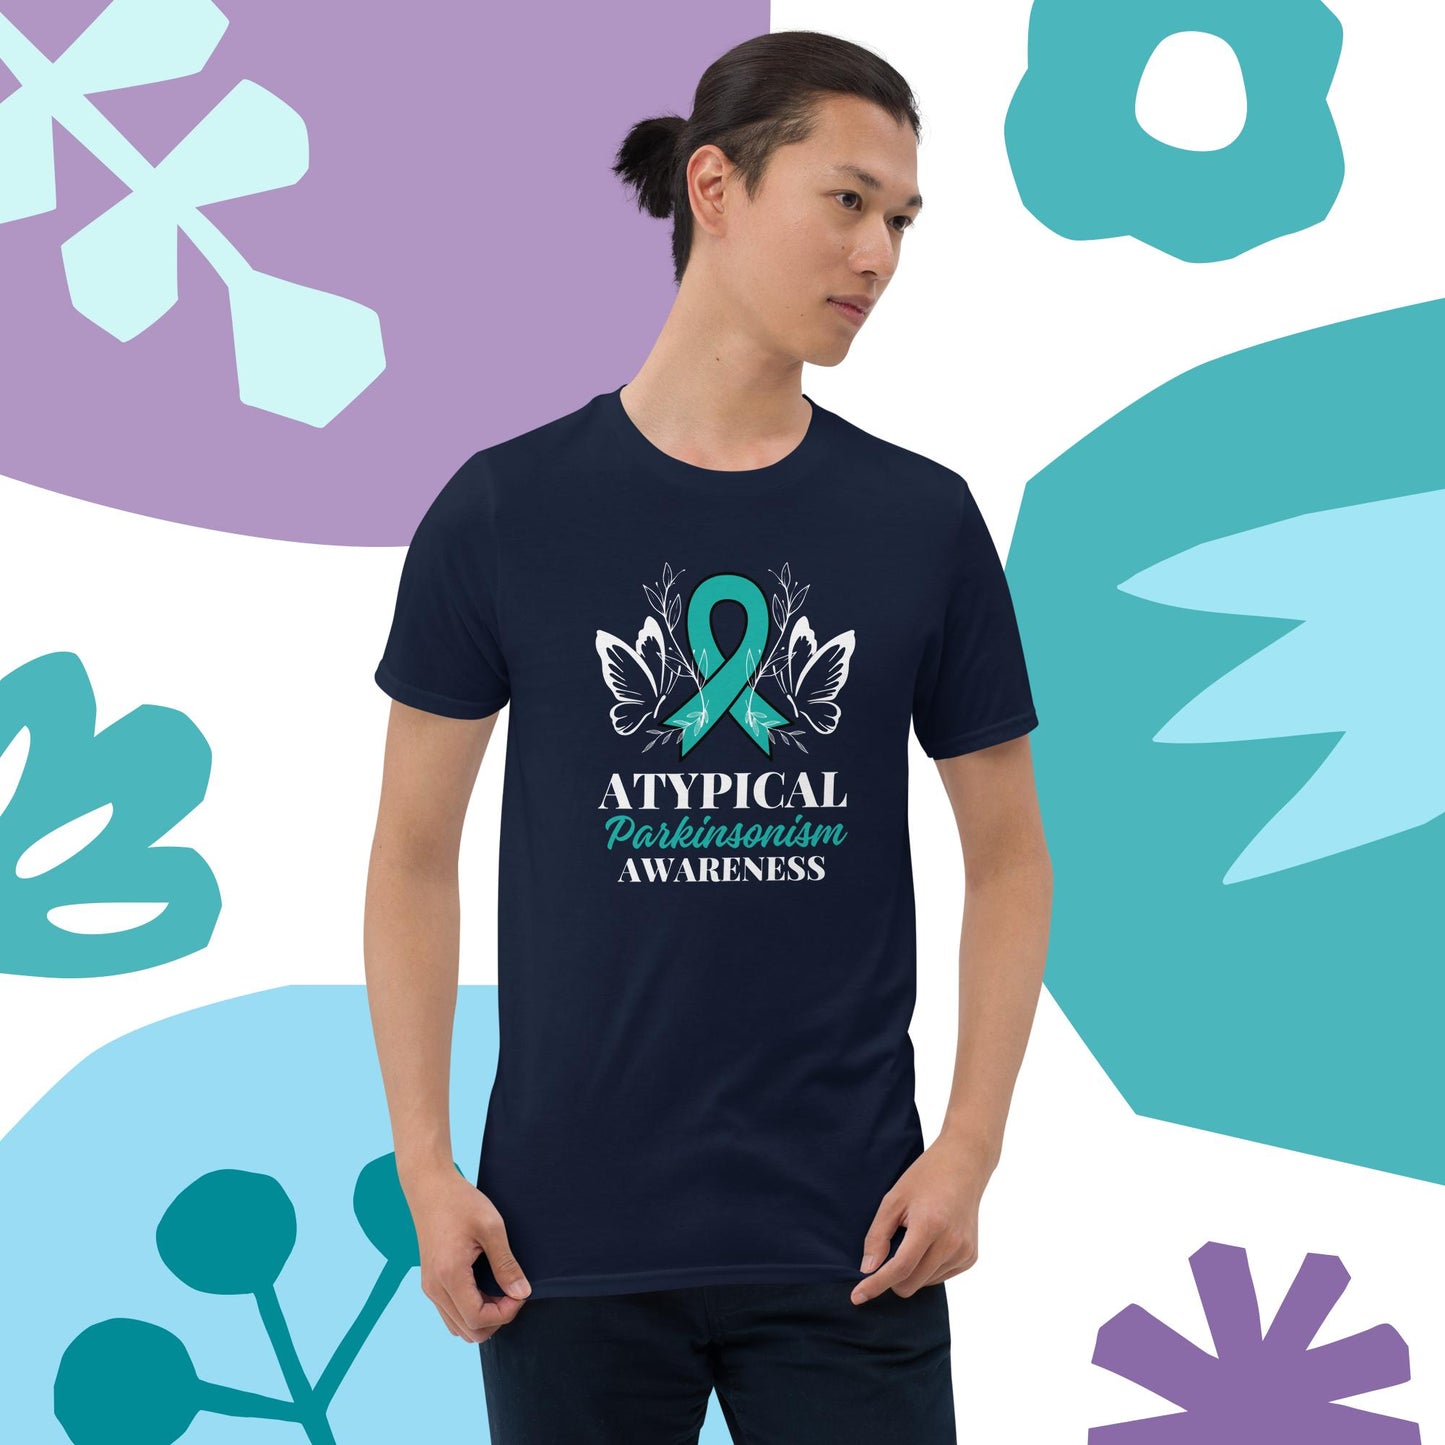 Atypical Parkinsonism Awareness Short-Sleeve Unisex T-Shirt